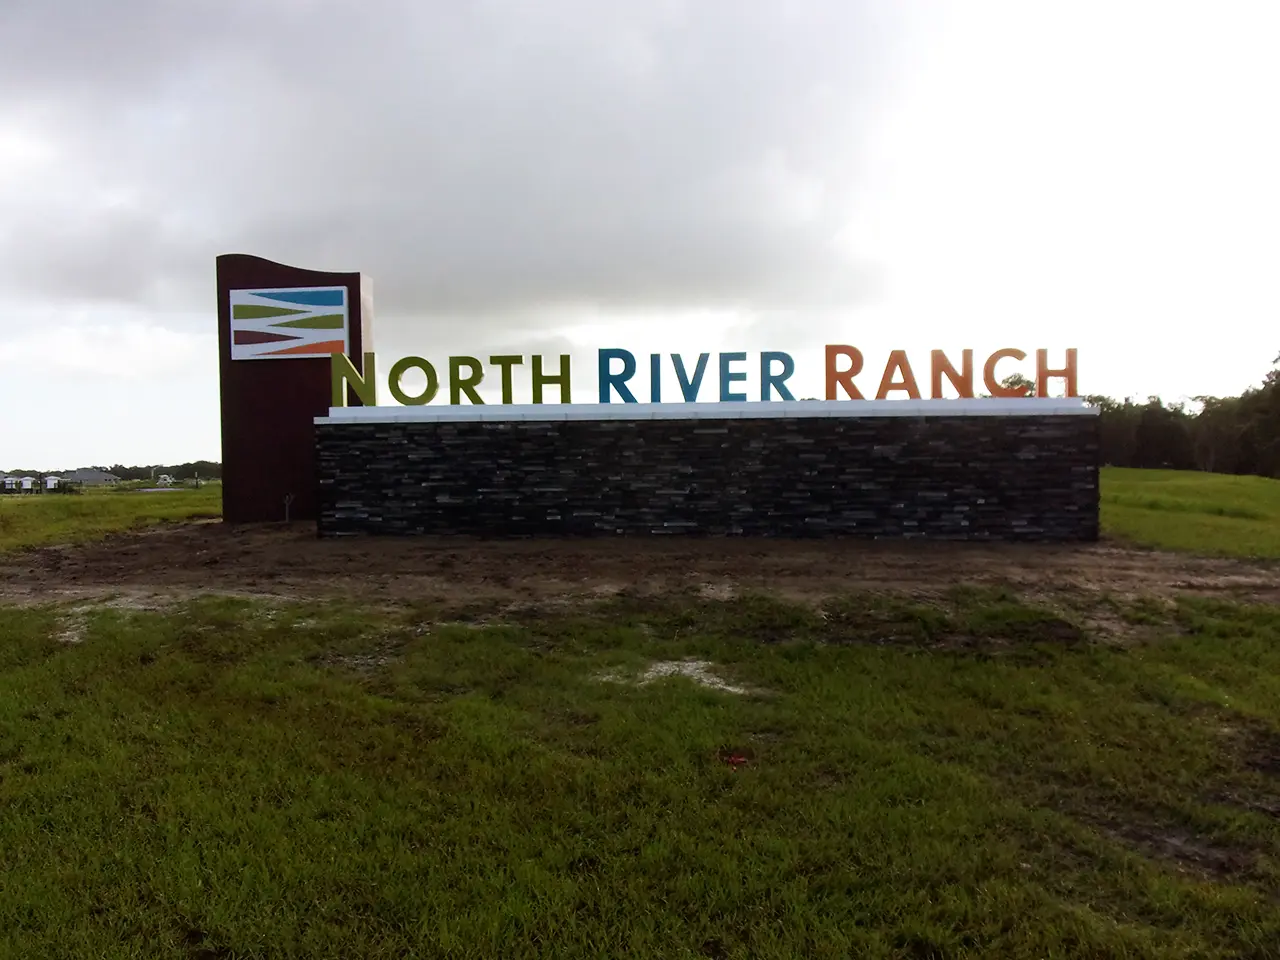 North River Ranch sign